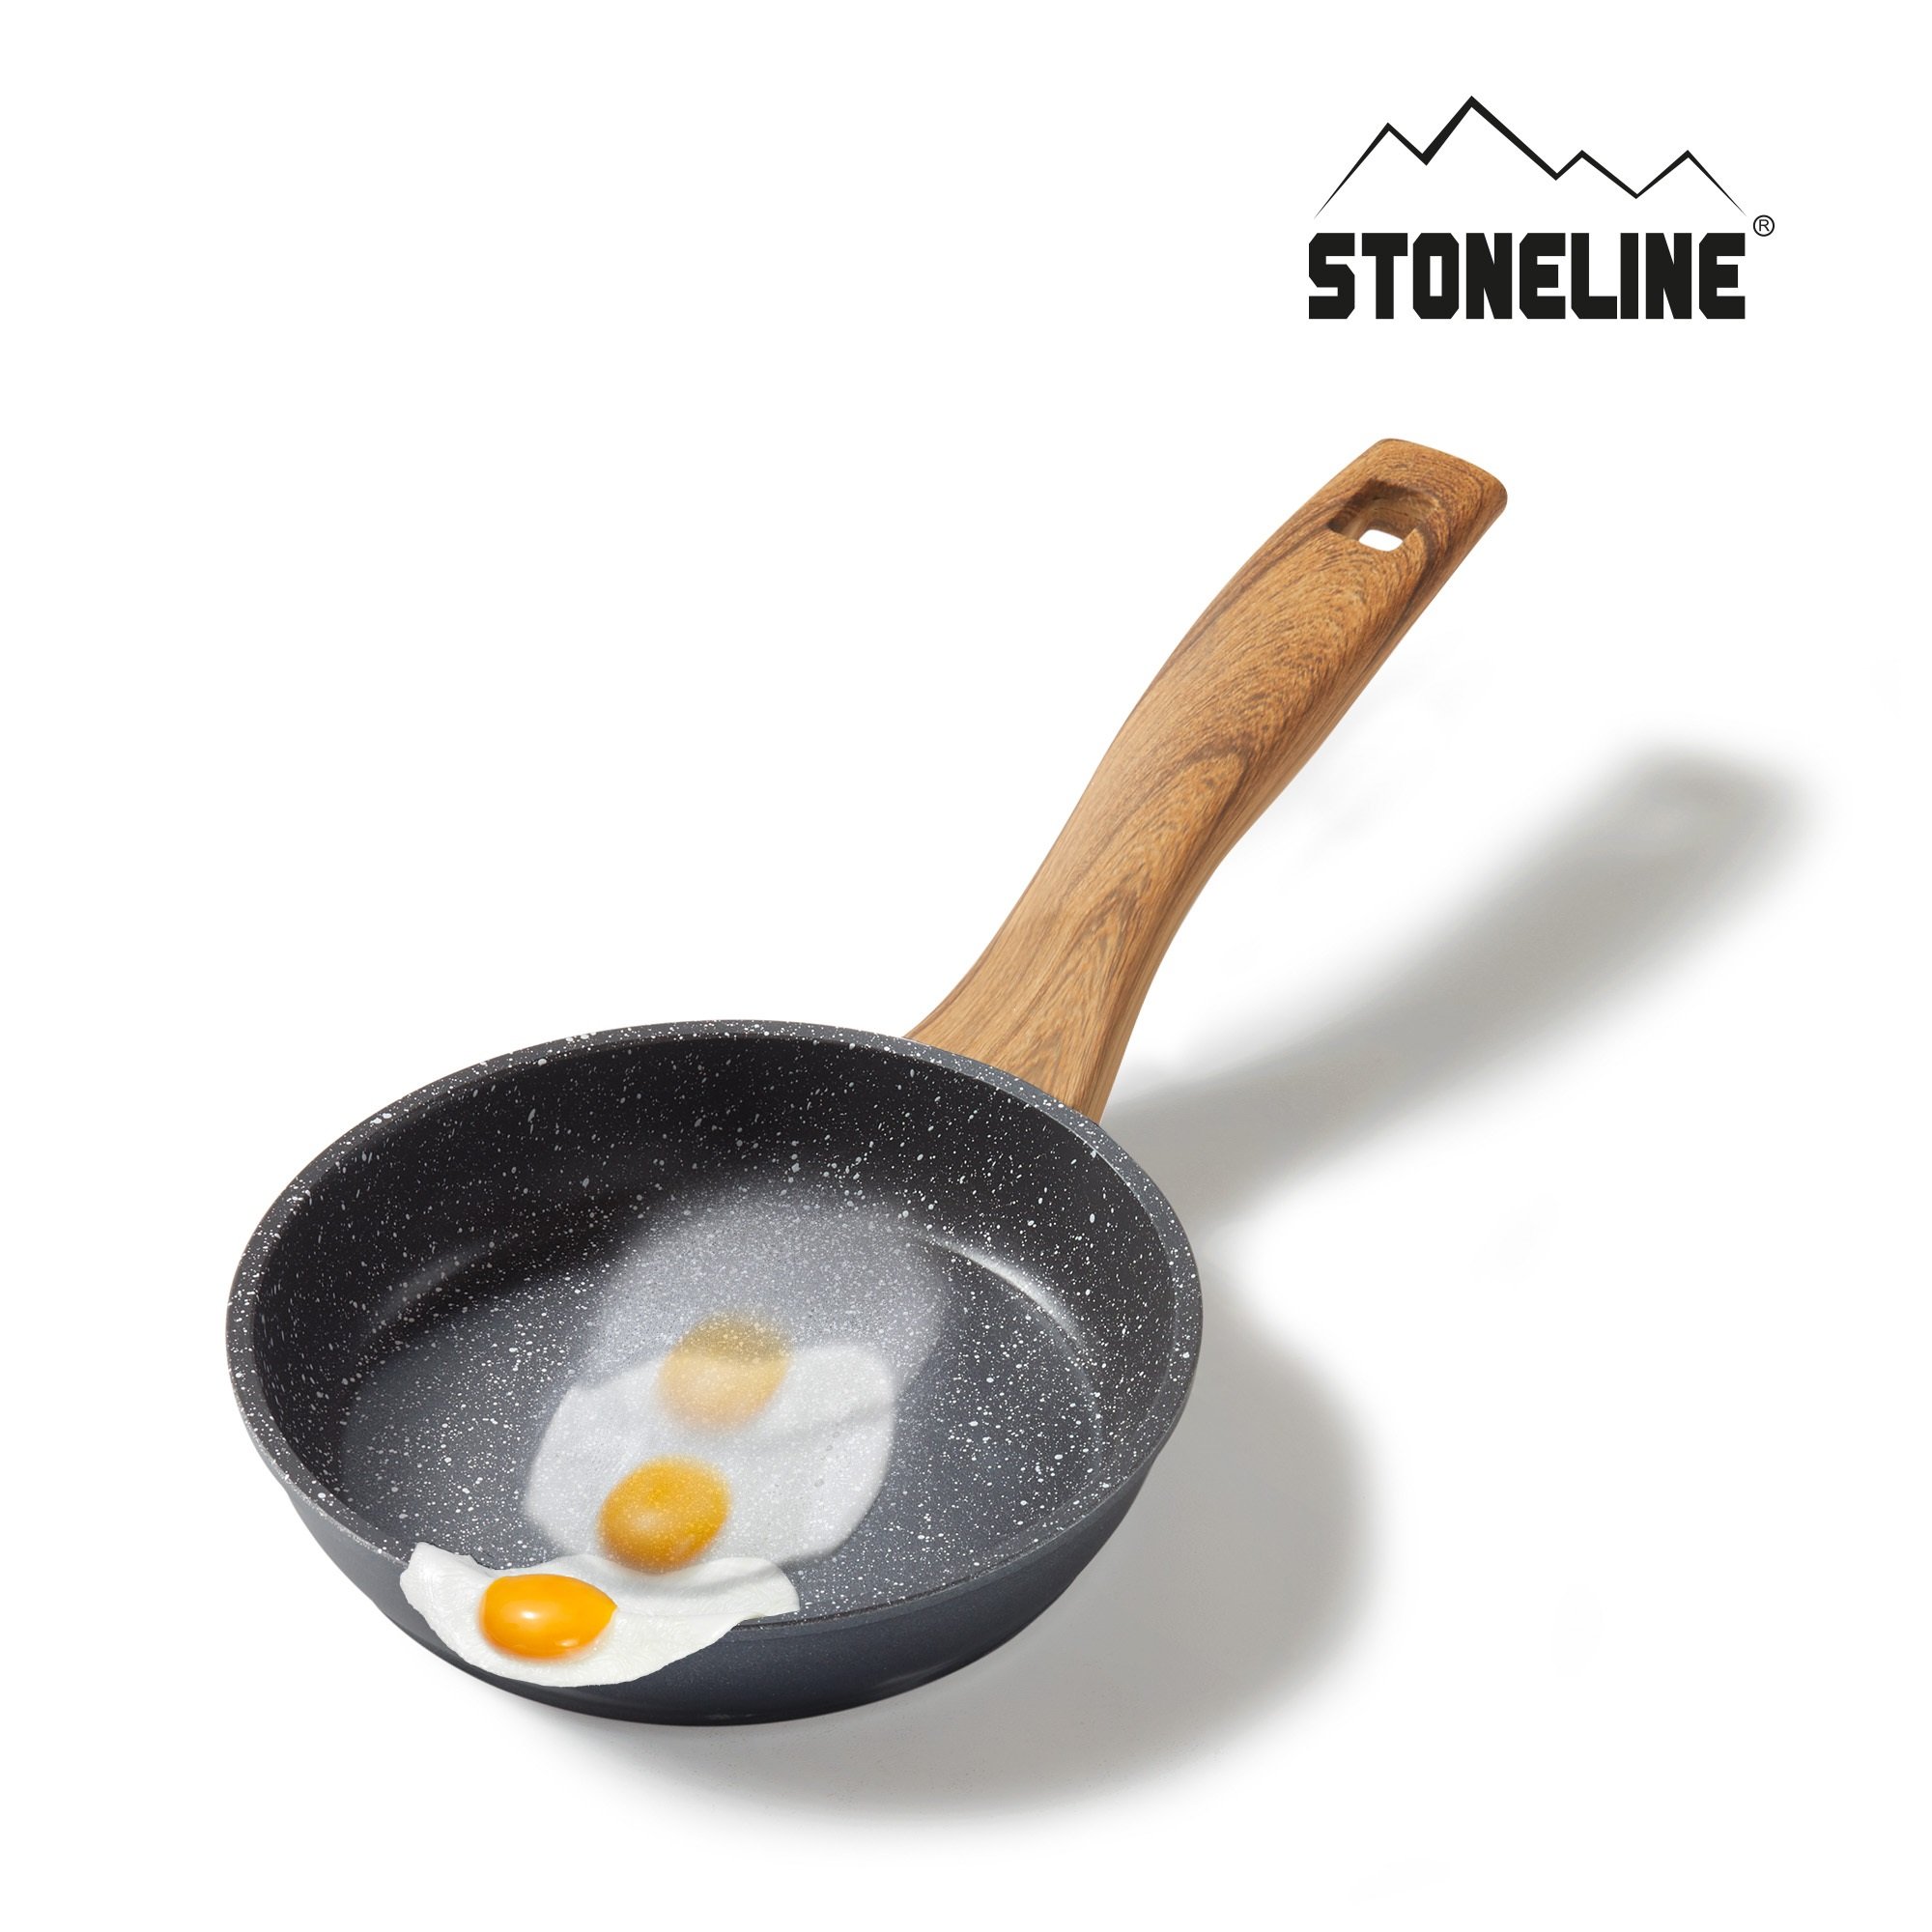 STONELINE® Back to Nature sartén 16 cm, sartén antiadherente para tortillas, apta para inducción